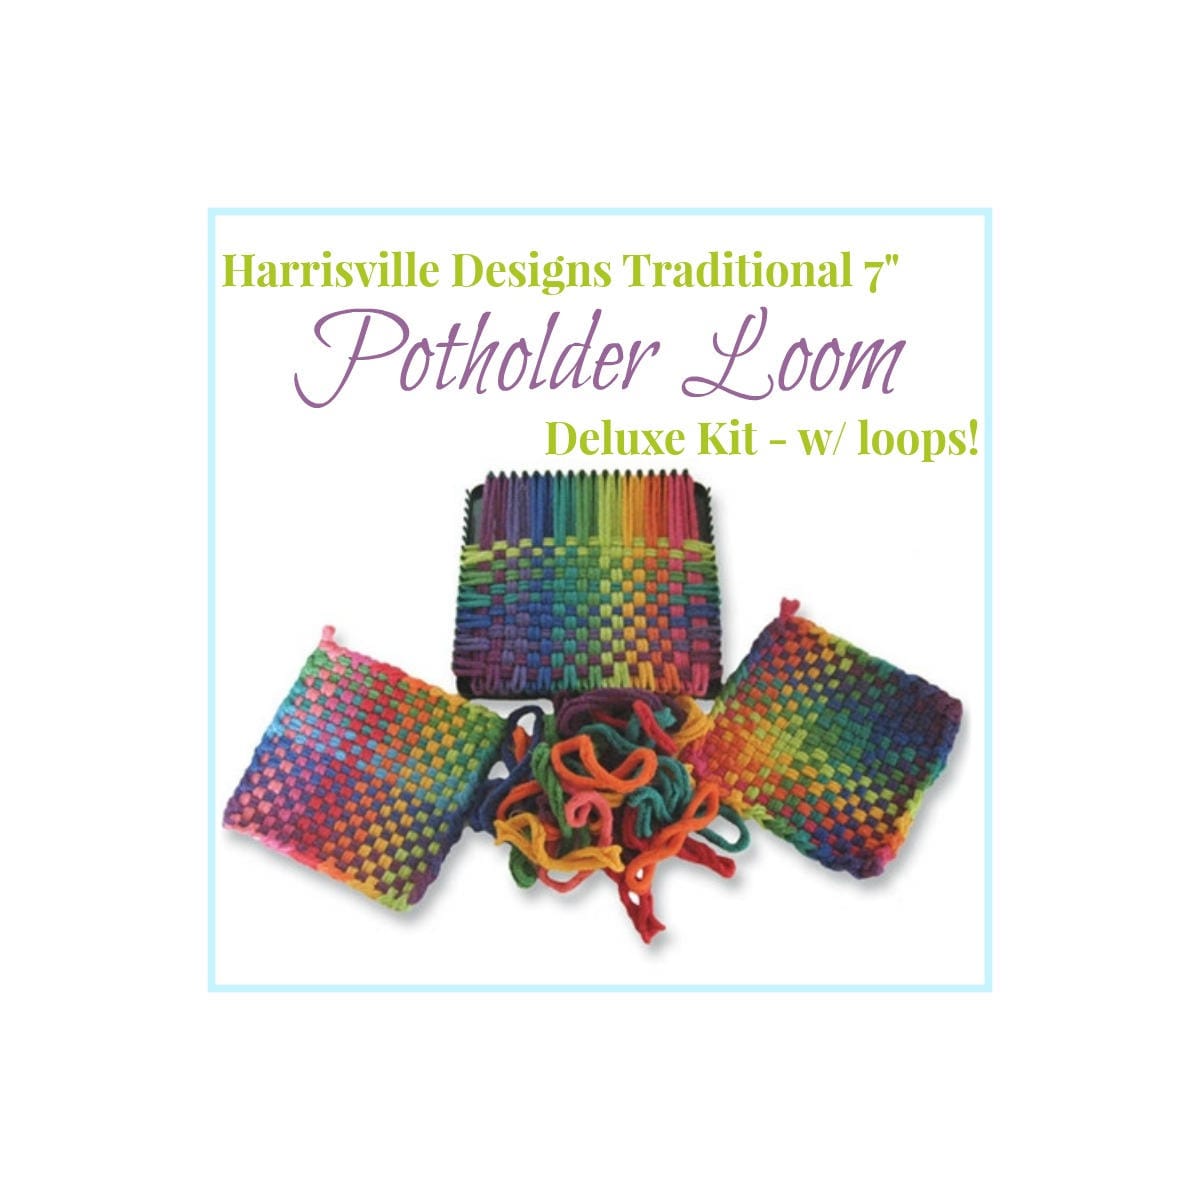 Harrisville Designs Potholder Kit